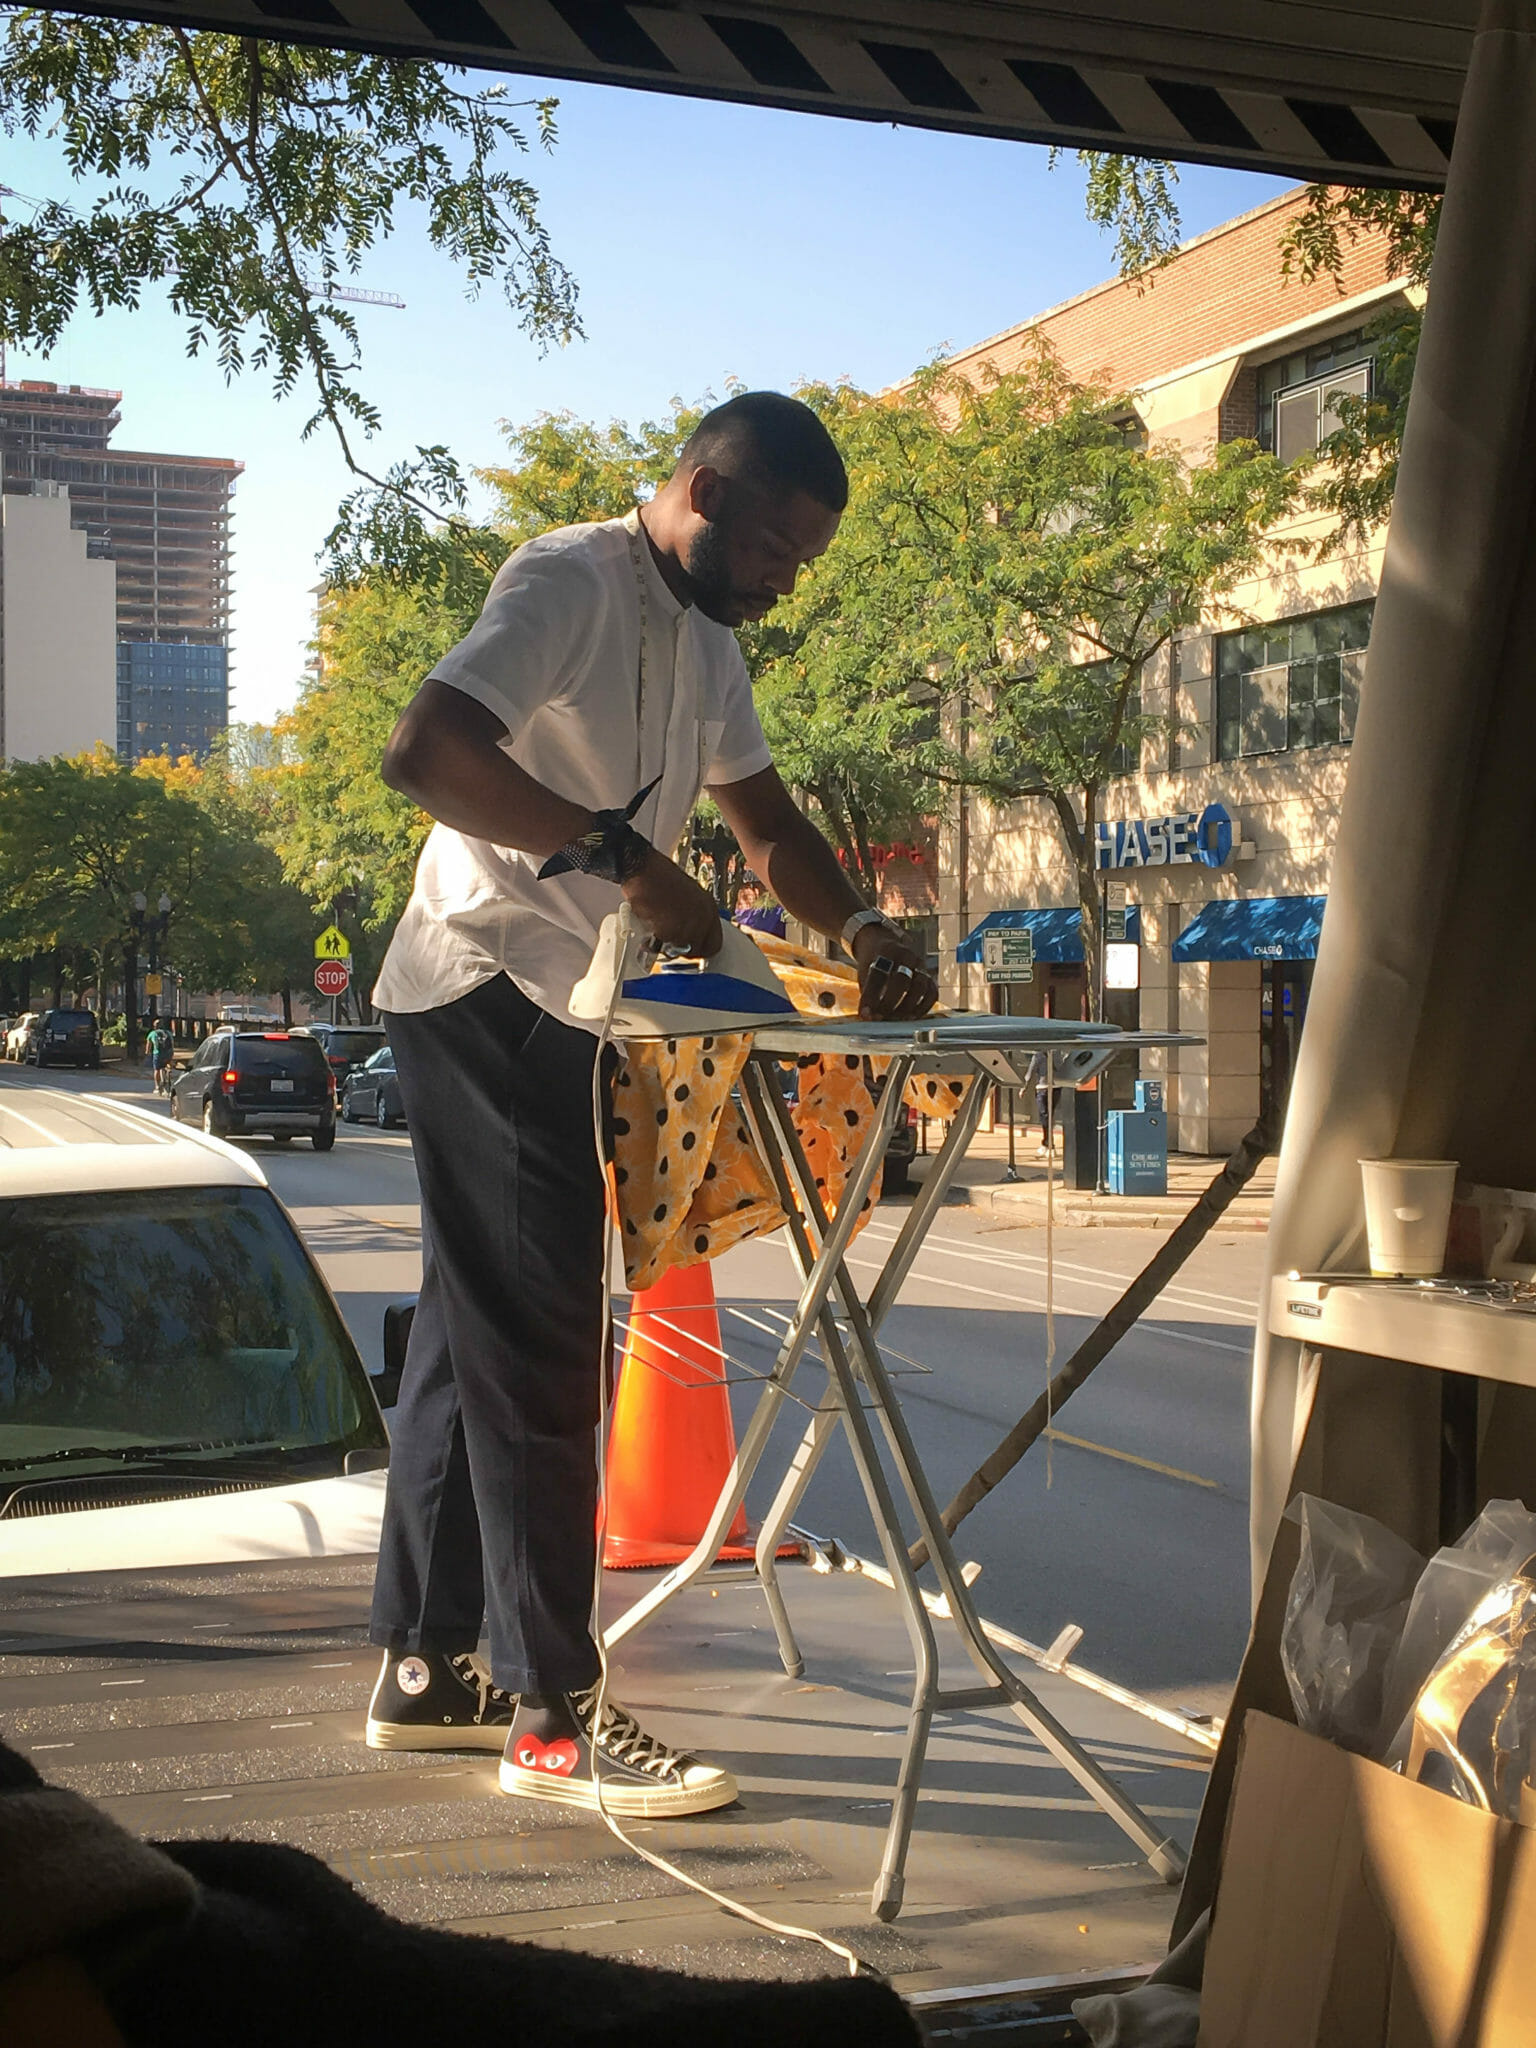 An African-American man ironing yellow sunburst print fabric on a city street.